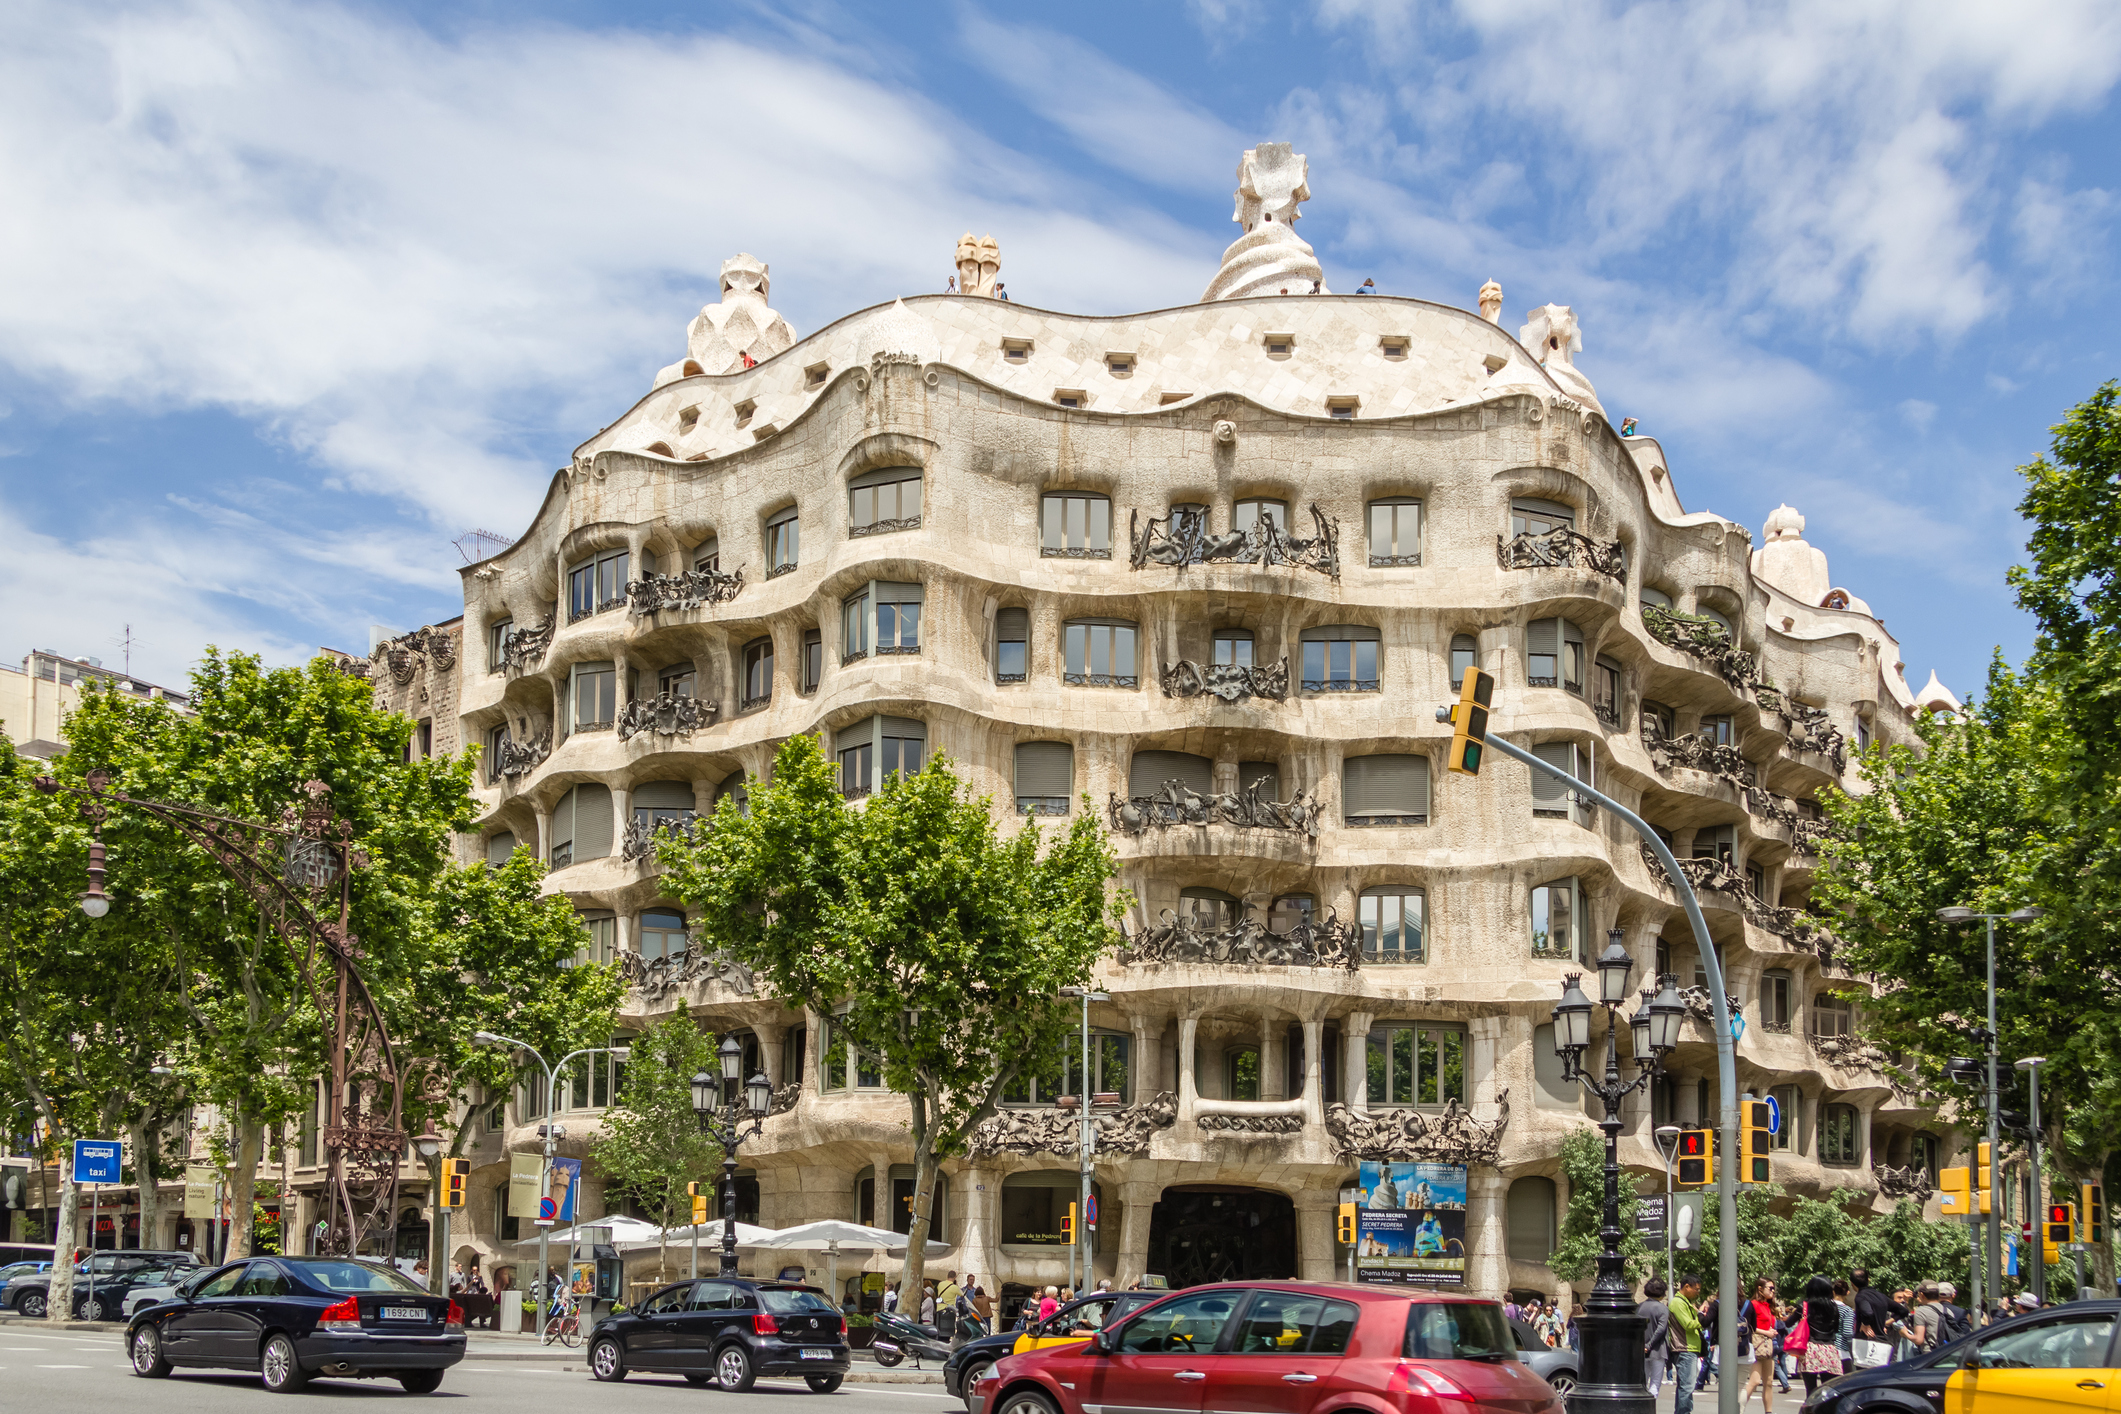 View-of-Casa-Mila-or-La-Pedrera,-in-Barcelona-483657959_2124x1416.jpeg